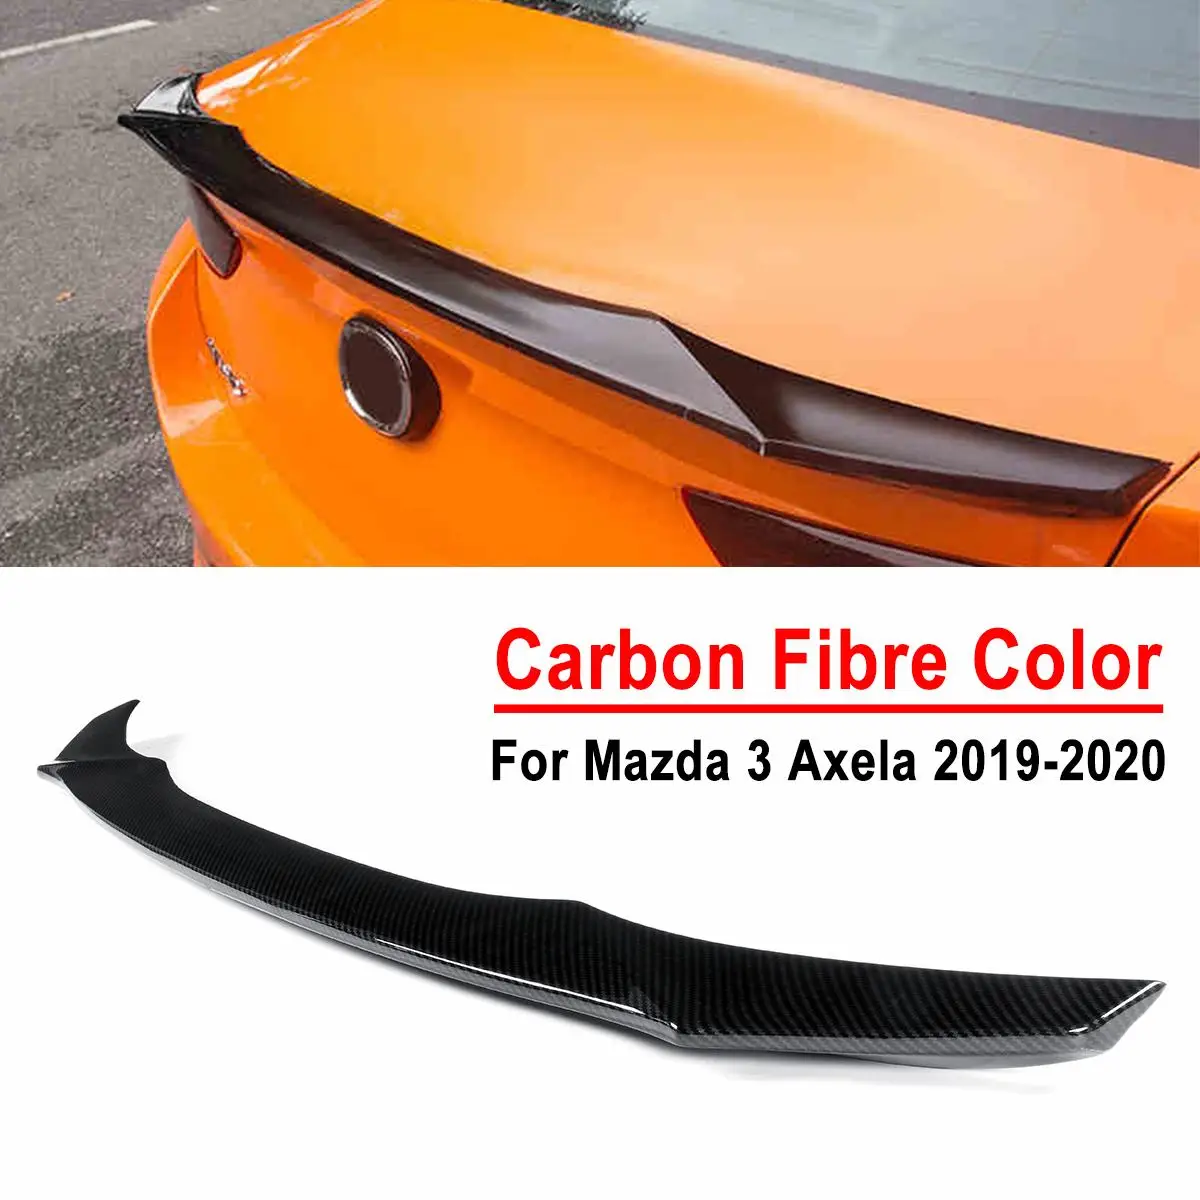 Висококачествен Заден Спойлер На Багажника За Устни Хвостовое Крило От Въглеродни Влакна, Заден Спойлер, Удължител За Устни За Mazda 3 Axela 2019 2020 2021